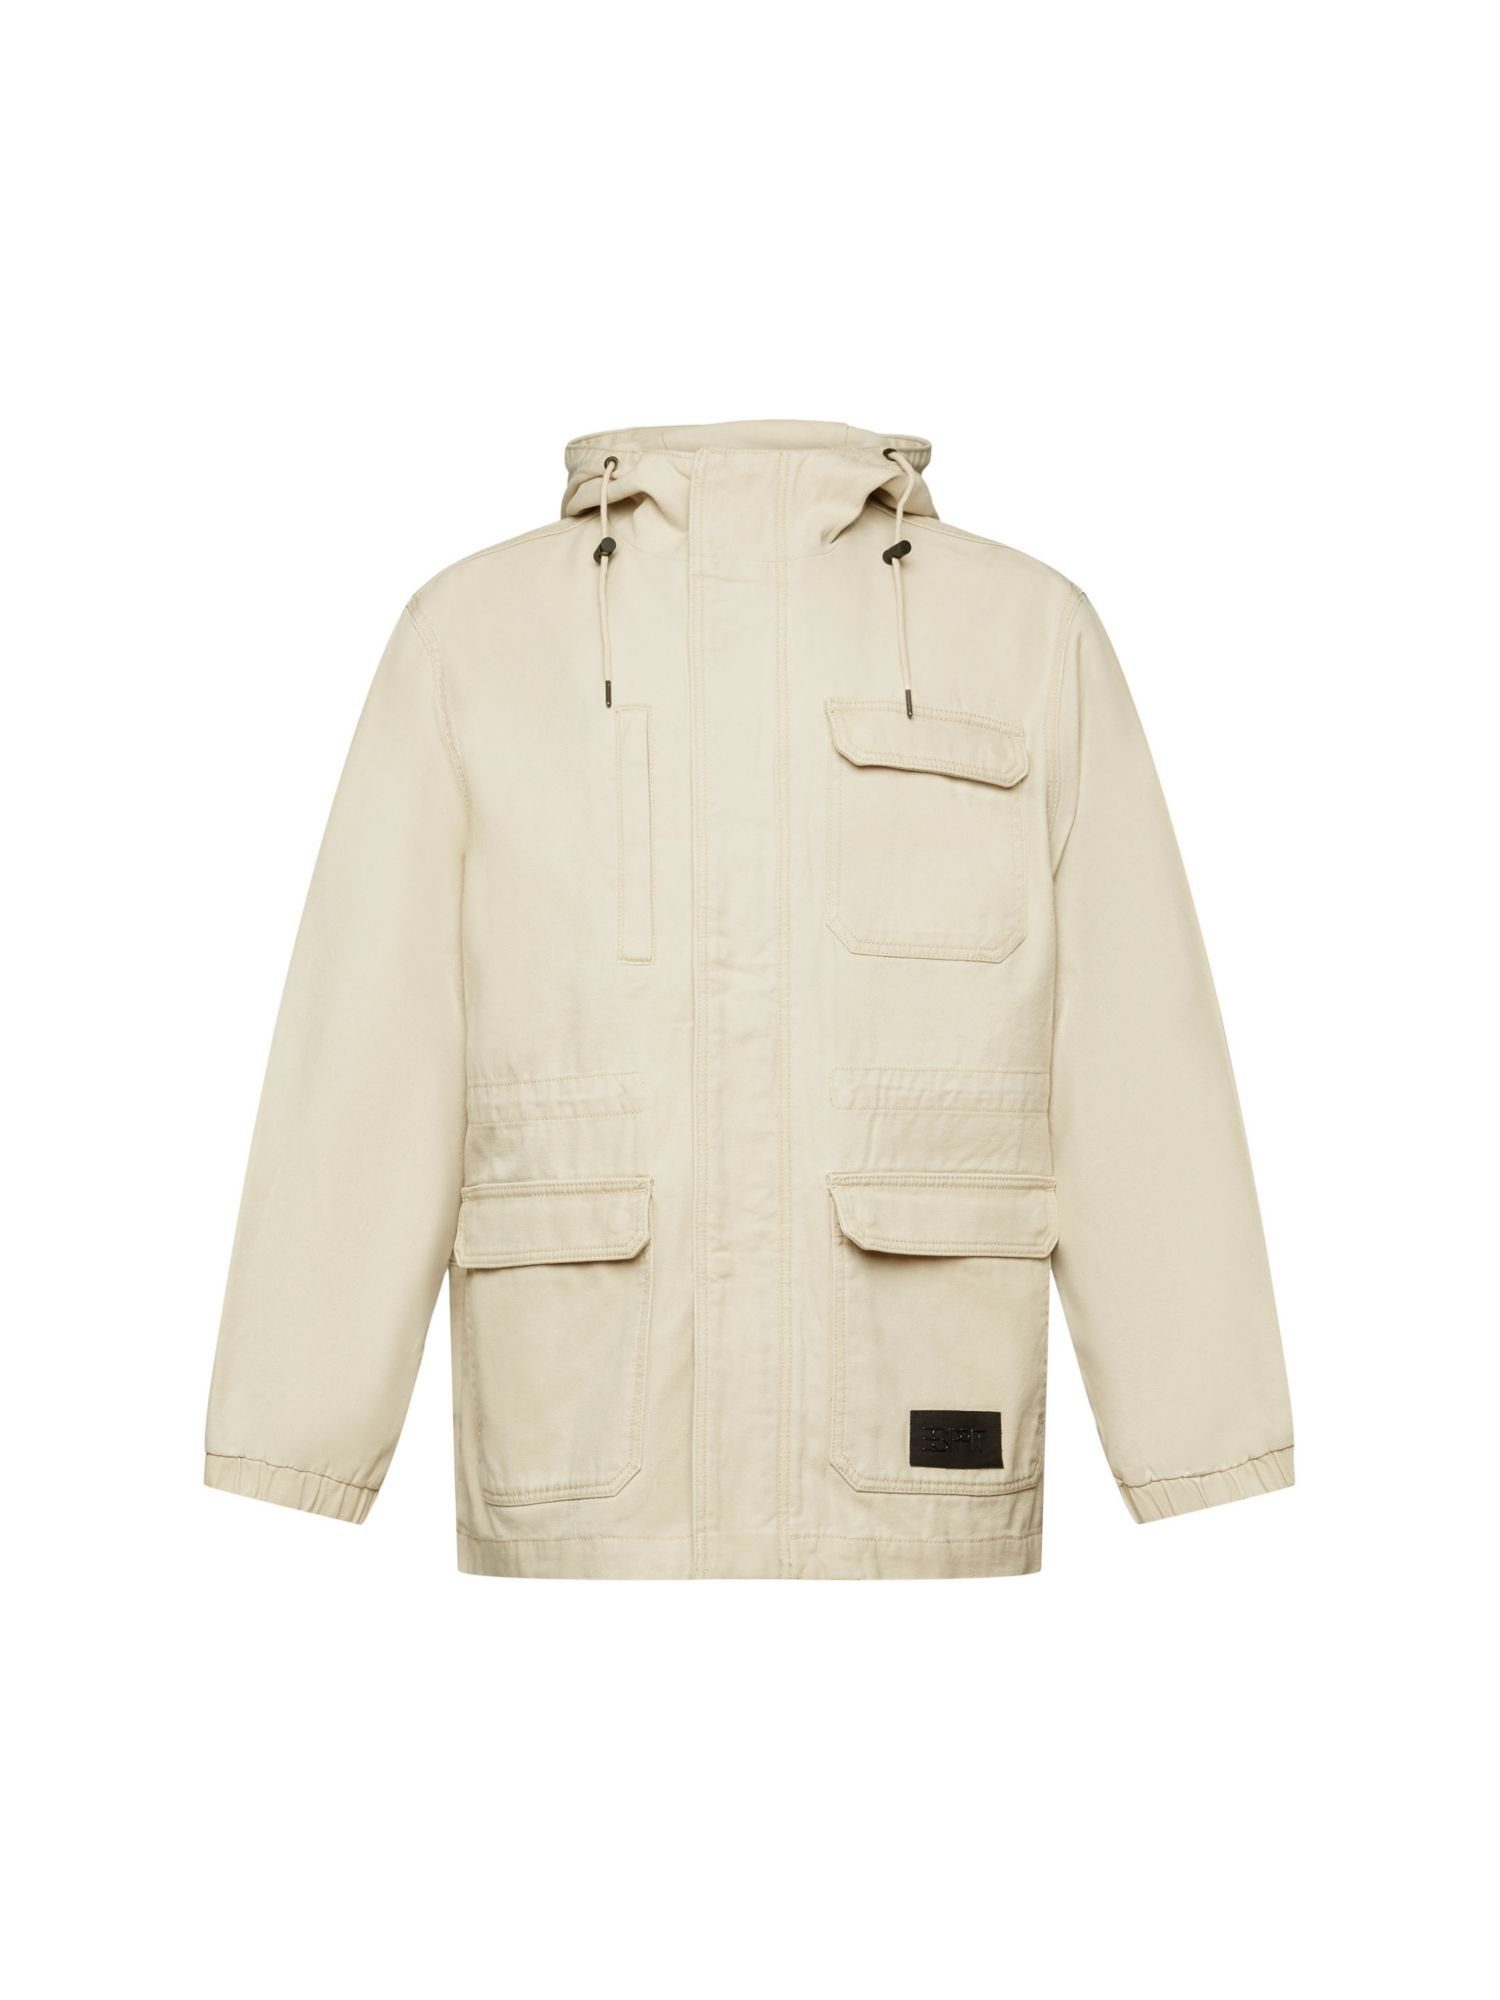 Esprit Fieldjacket Field-Jacke aus robuster Baumwolle